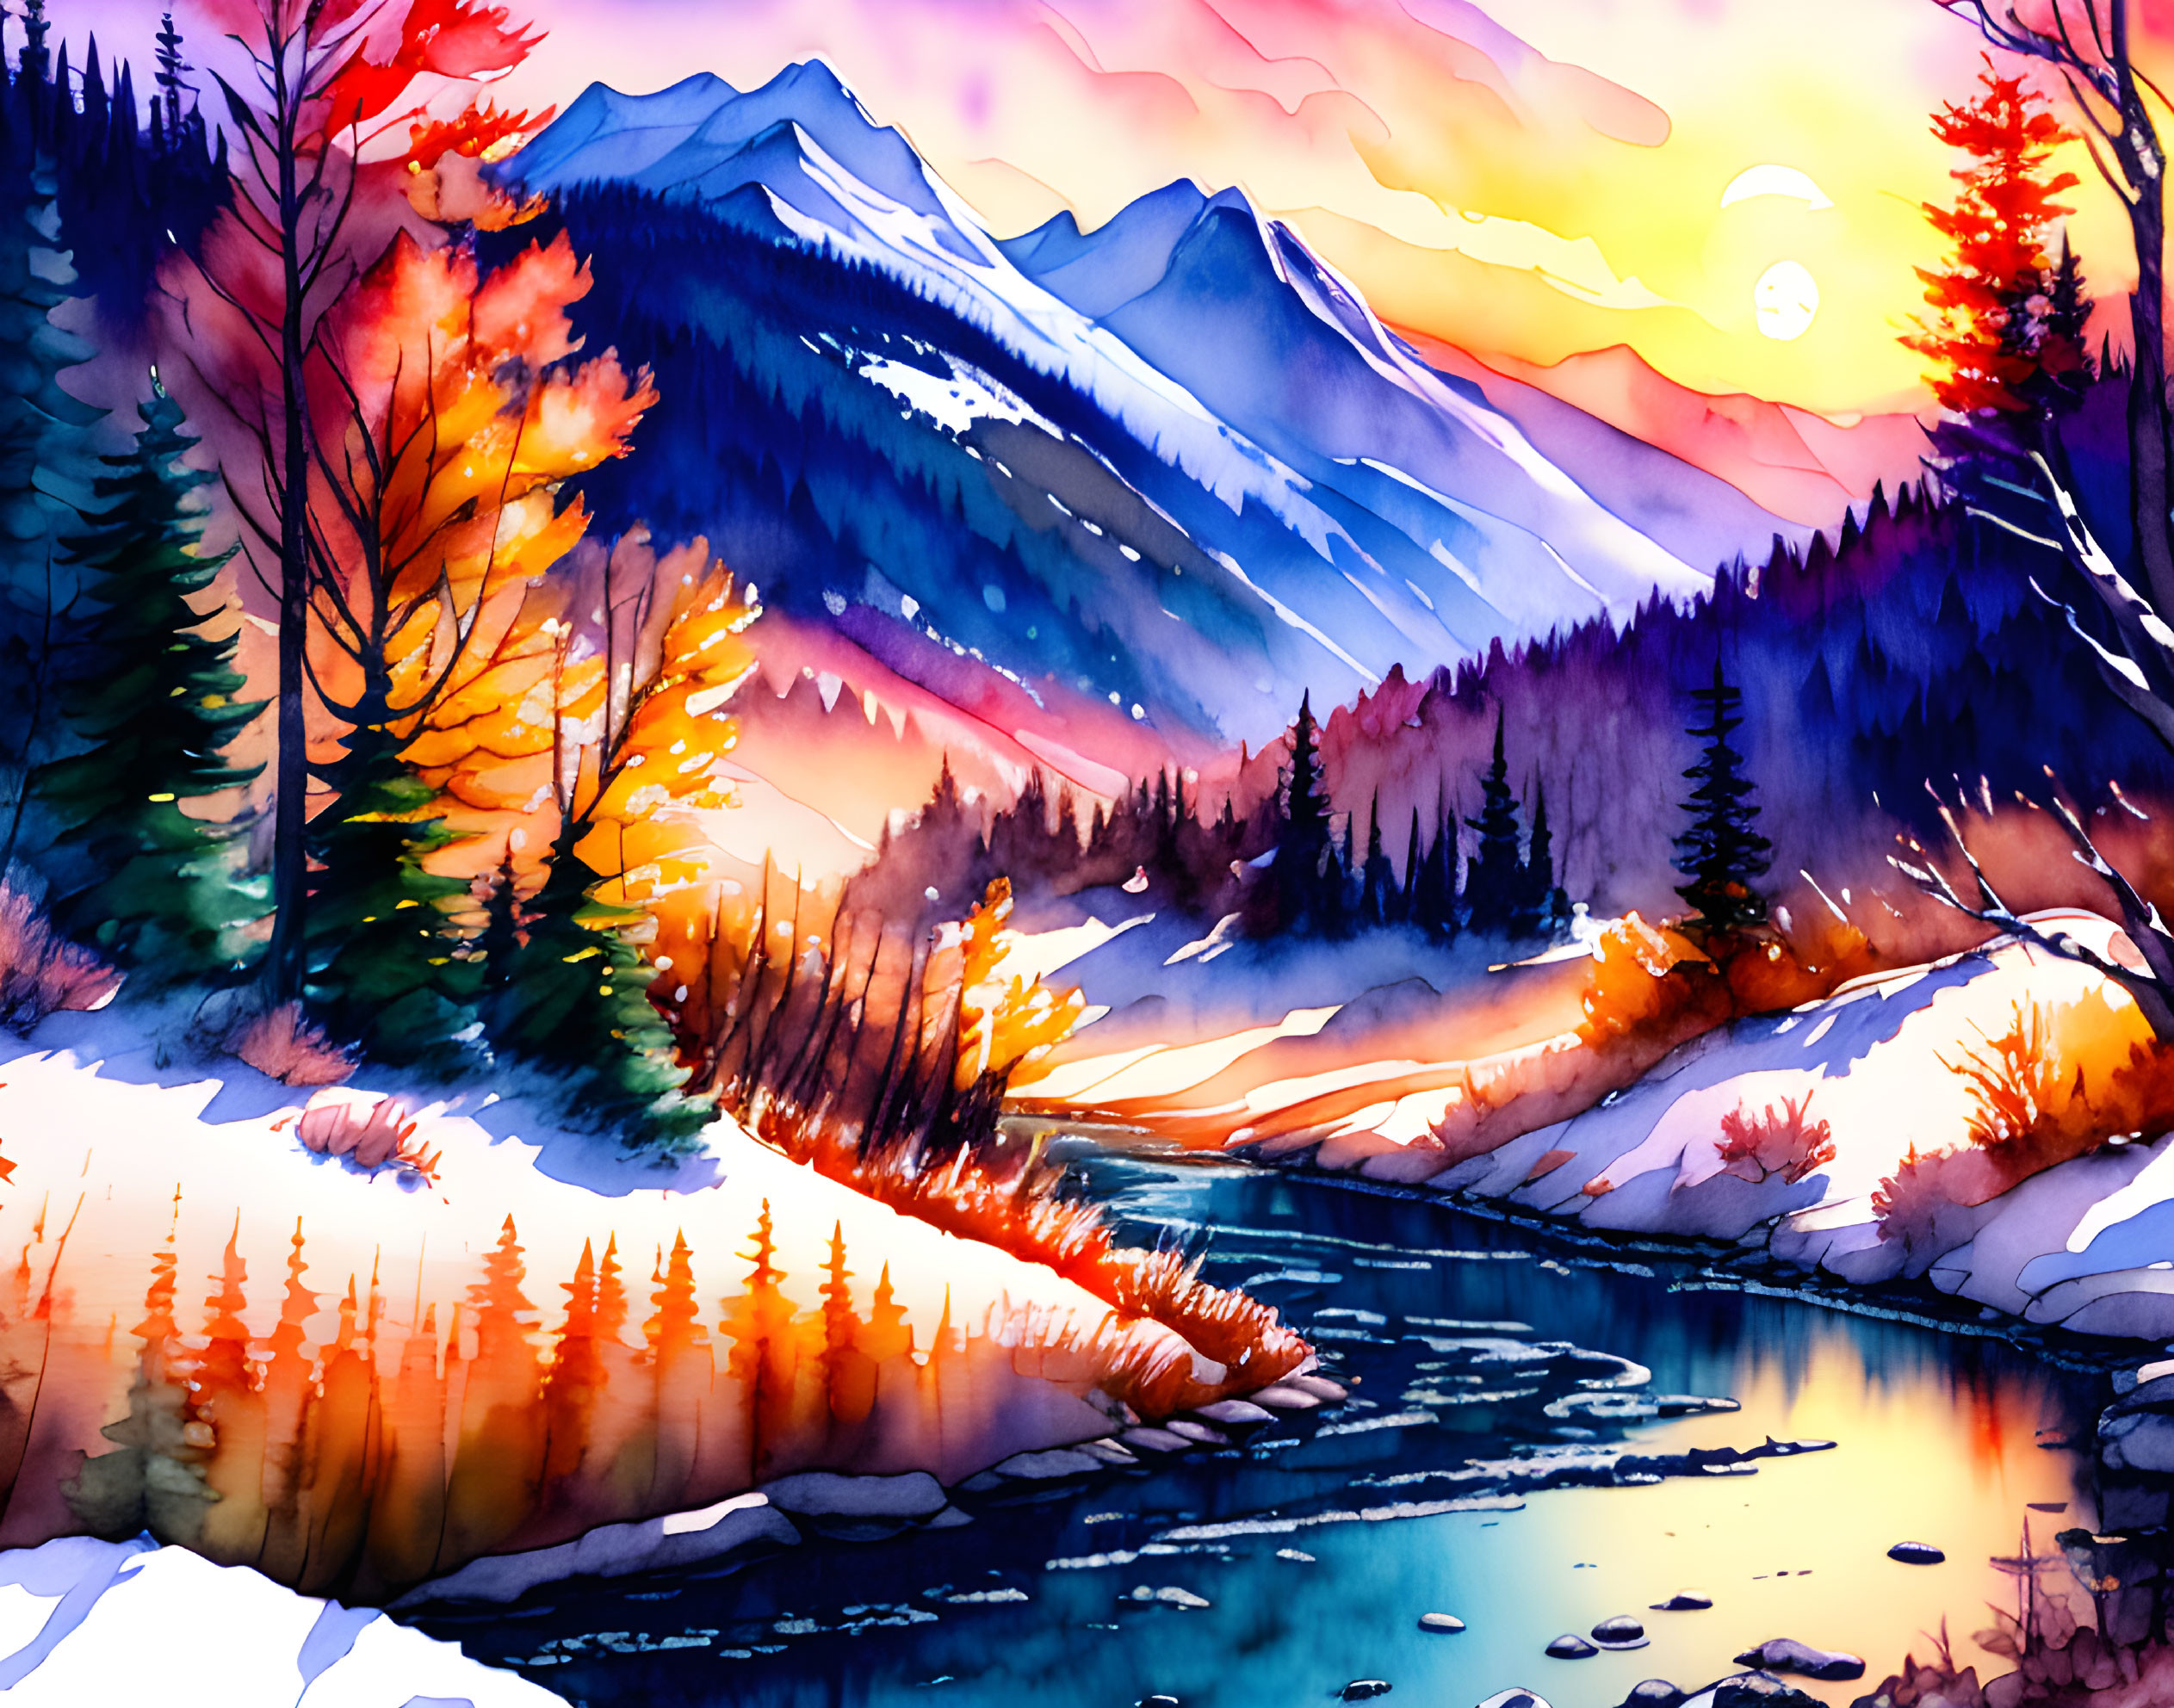 Colorful Watercolor Landscape: Sunset over Mountain Range & Autumn Trees